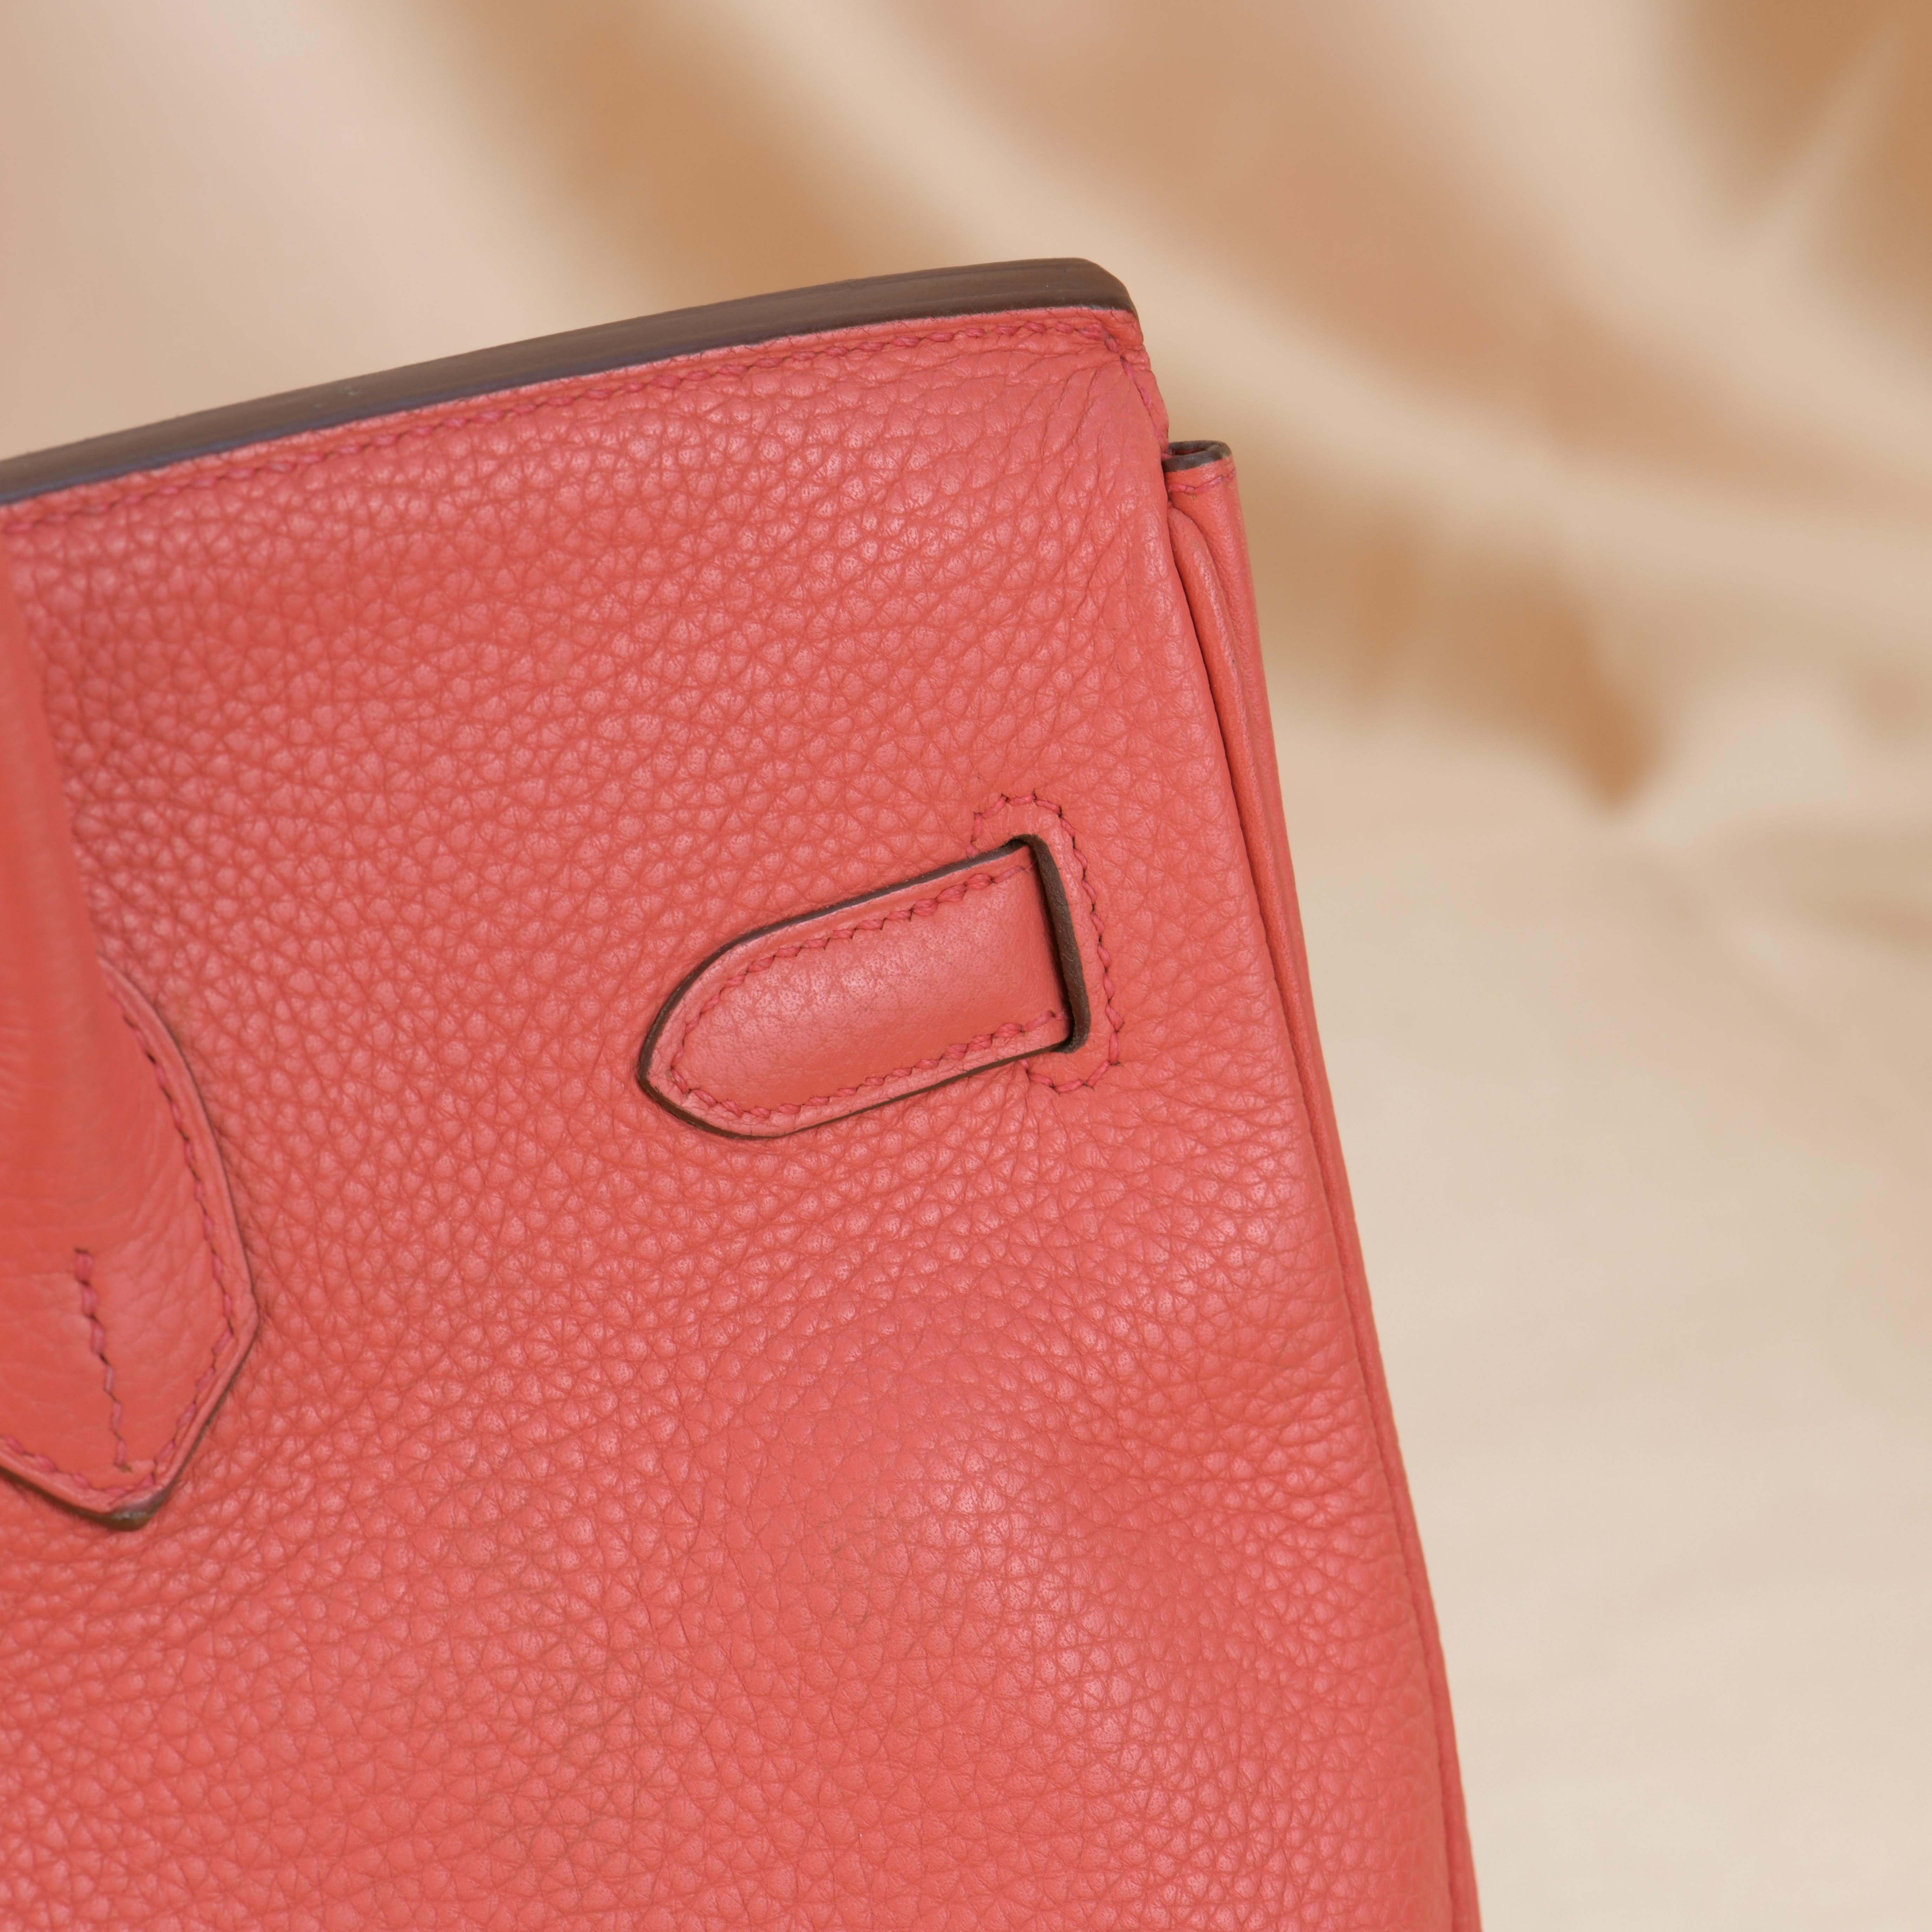 Hermès Rose Jaipur Togo Leather Birkin 35cm with Palladium Hardware 4